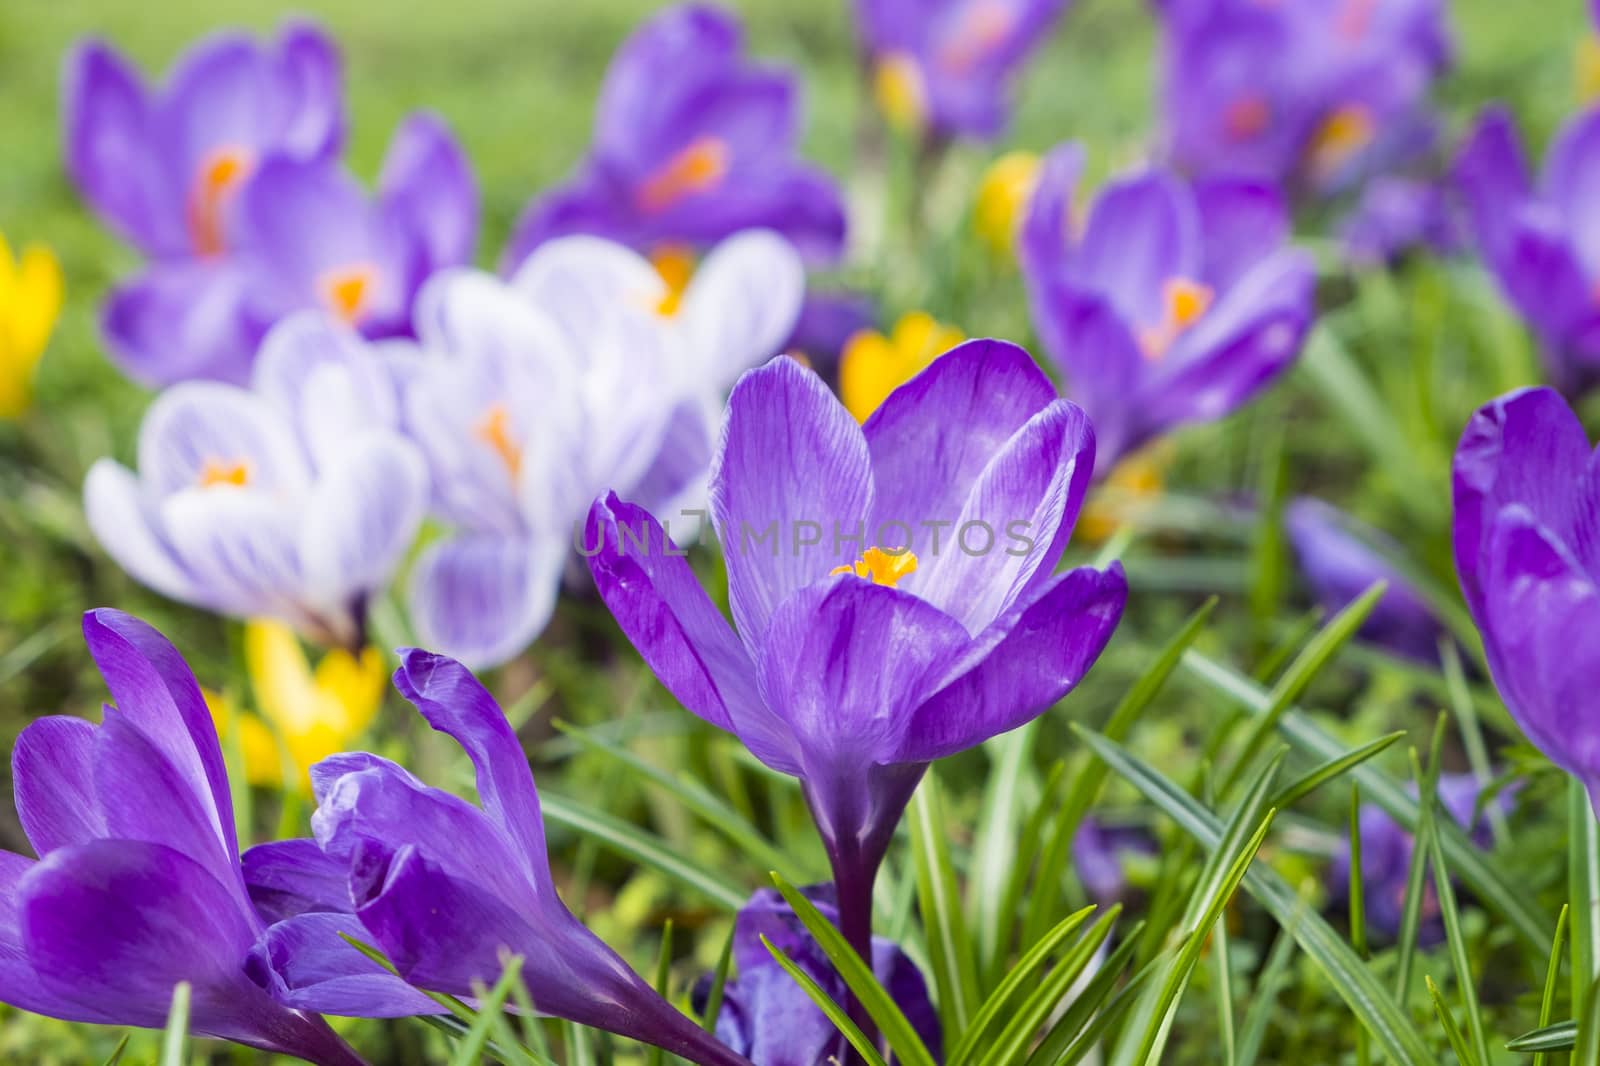 Multiple crocus flowers - crocus sativus by sijohnsen